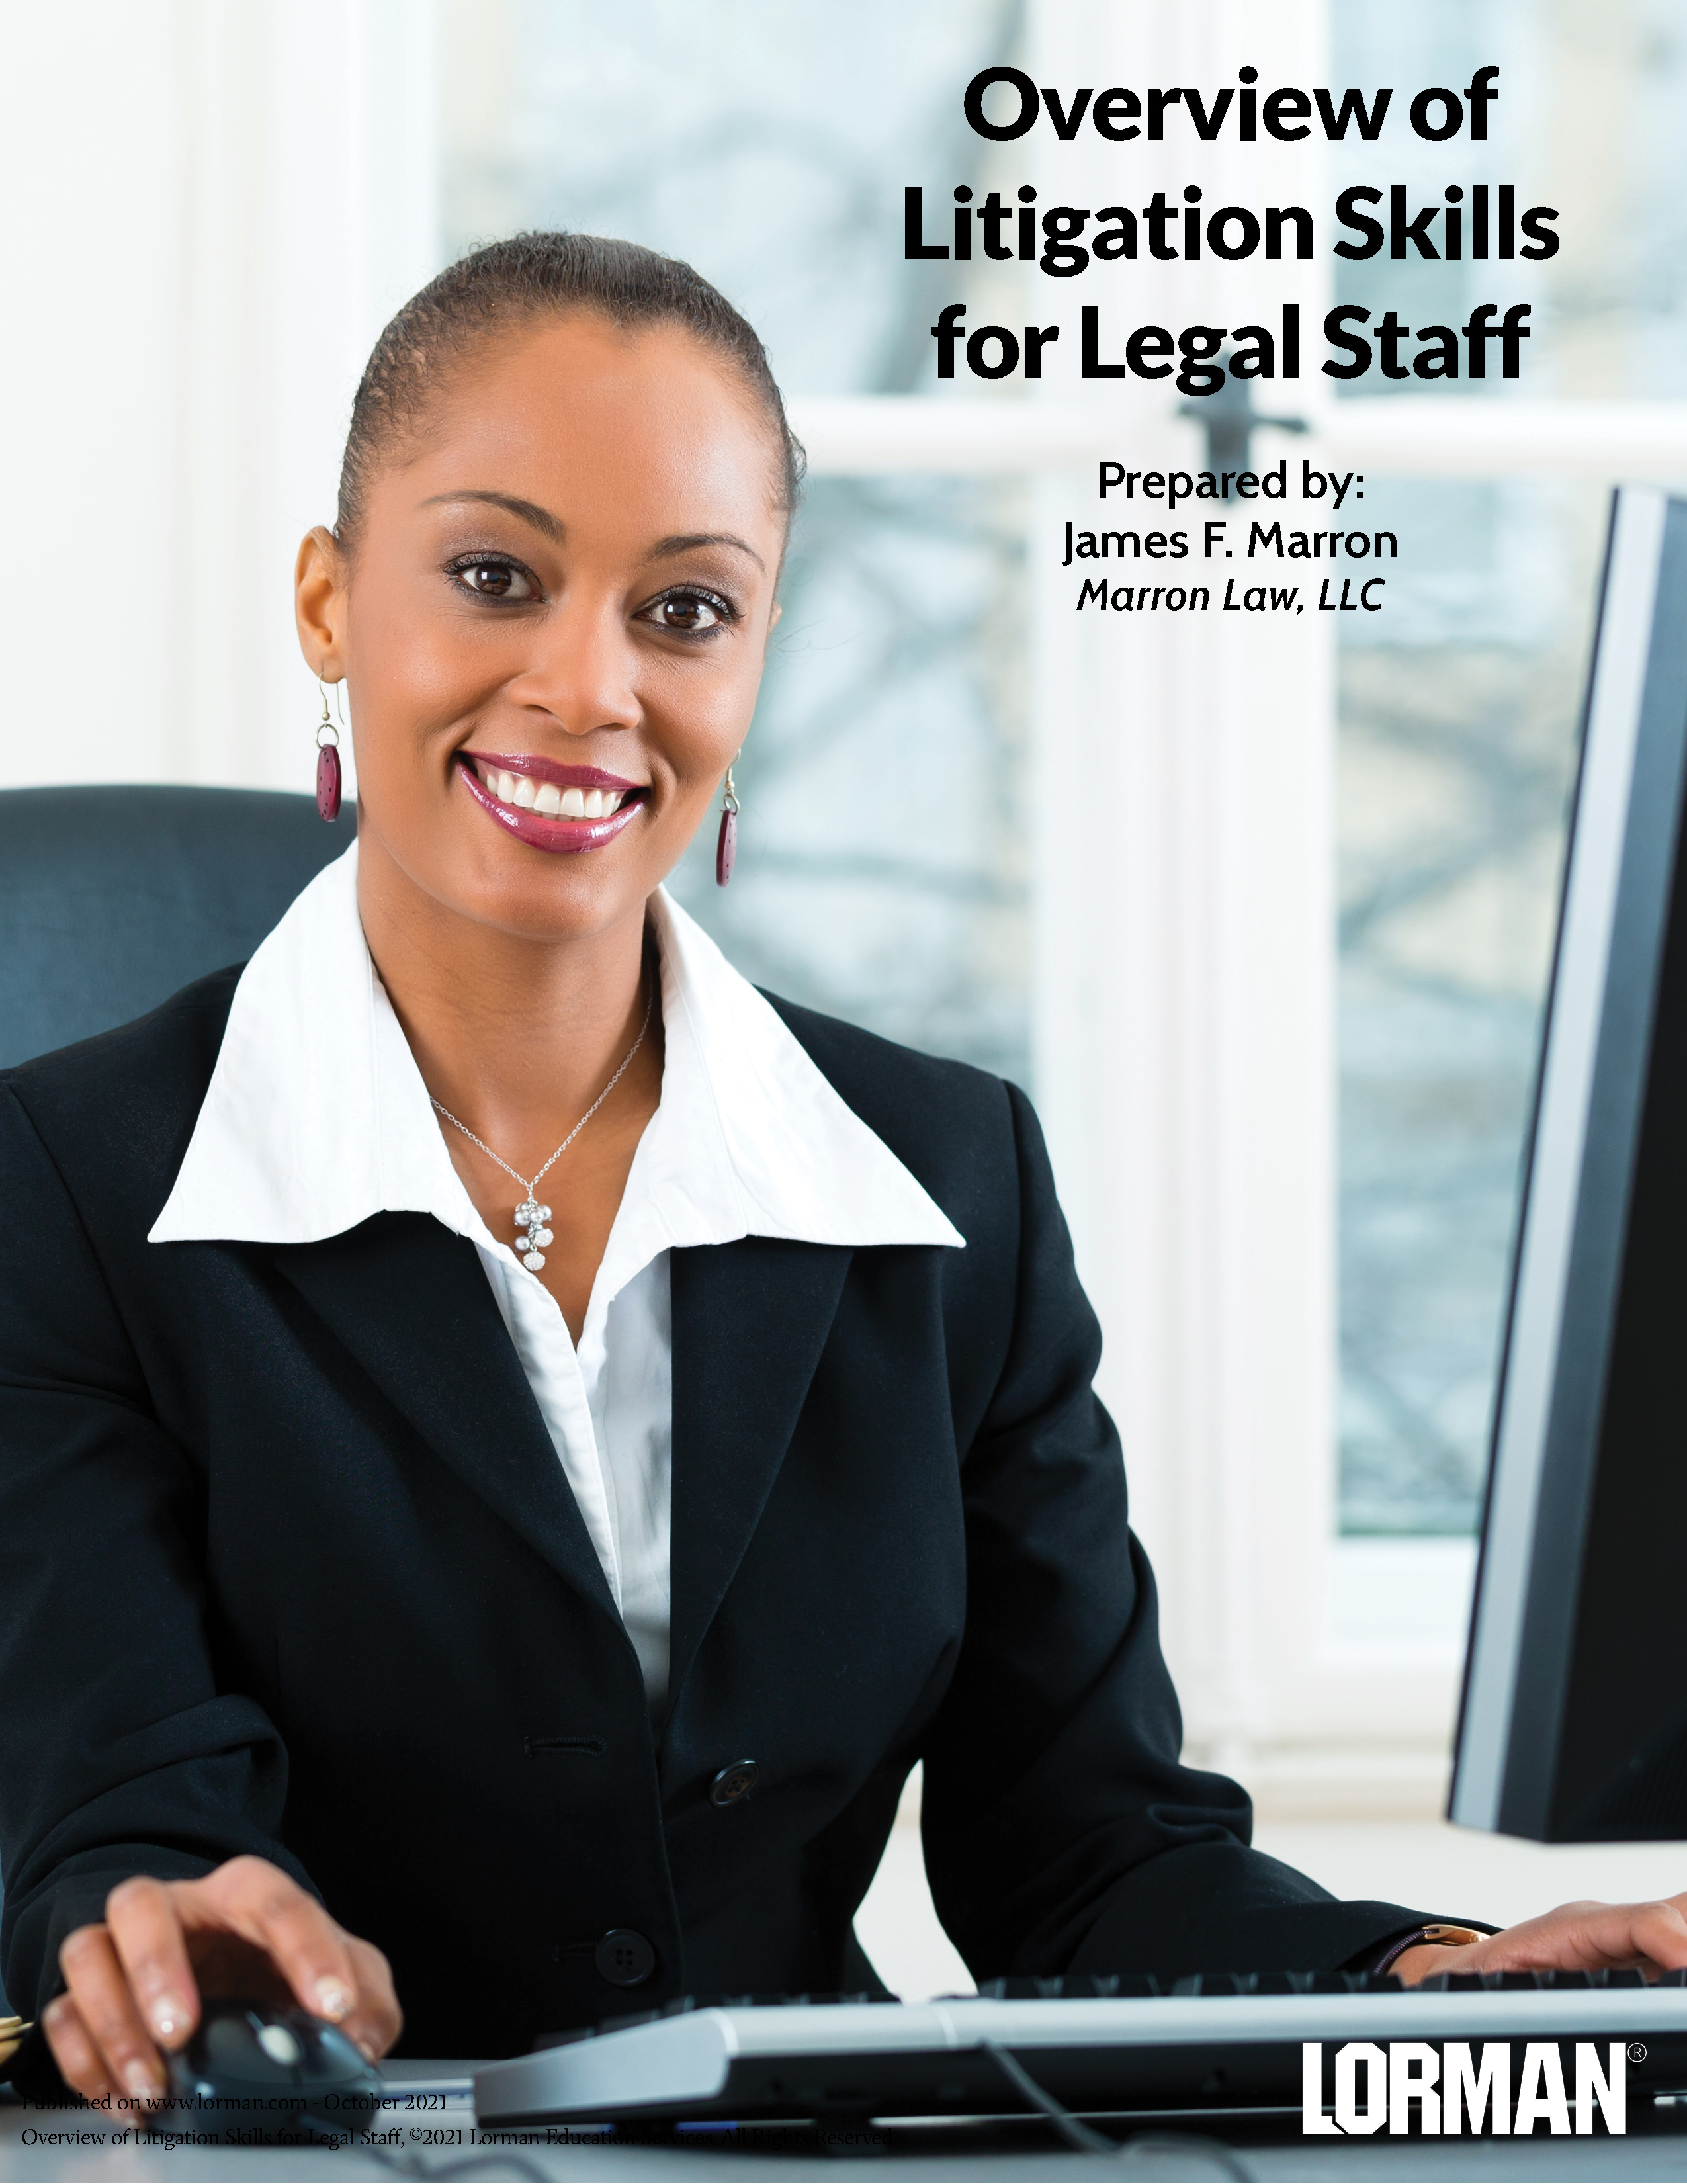 Overview of Litigation Skills for Legal Staff